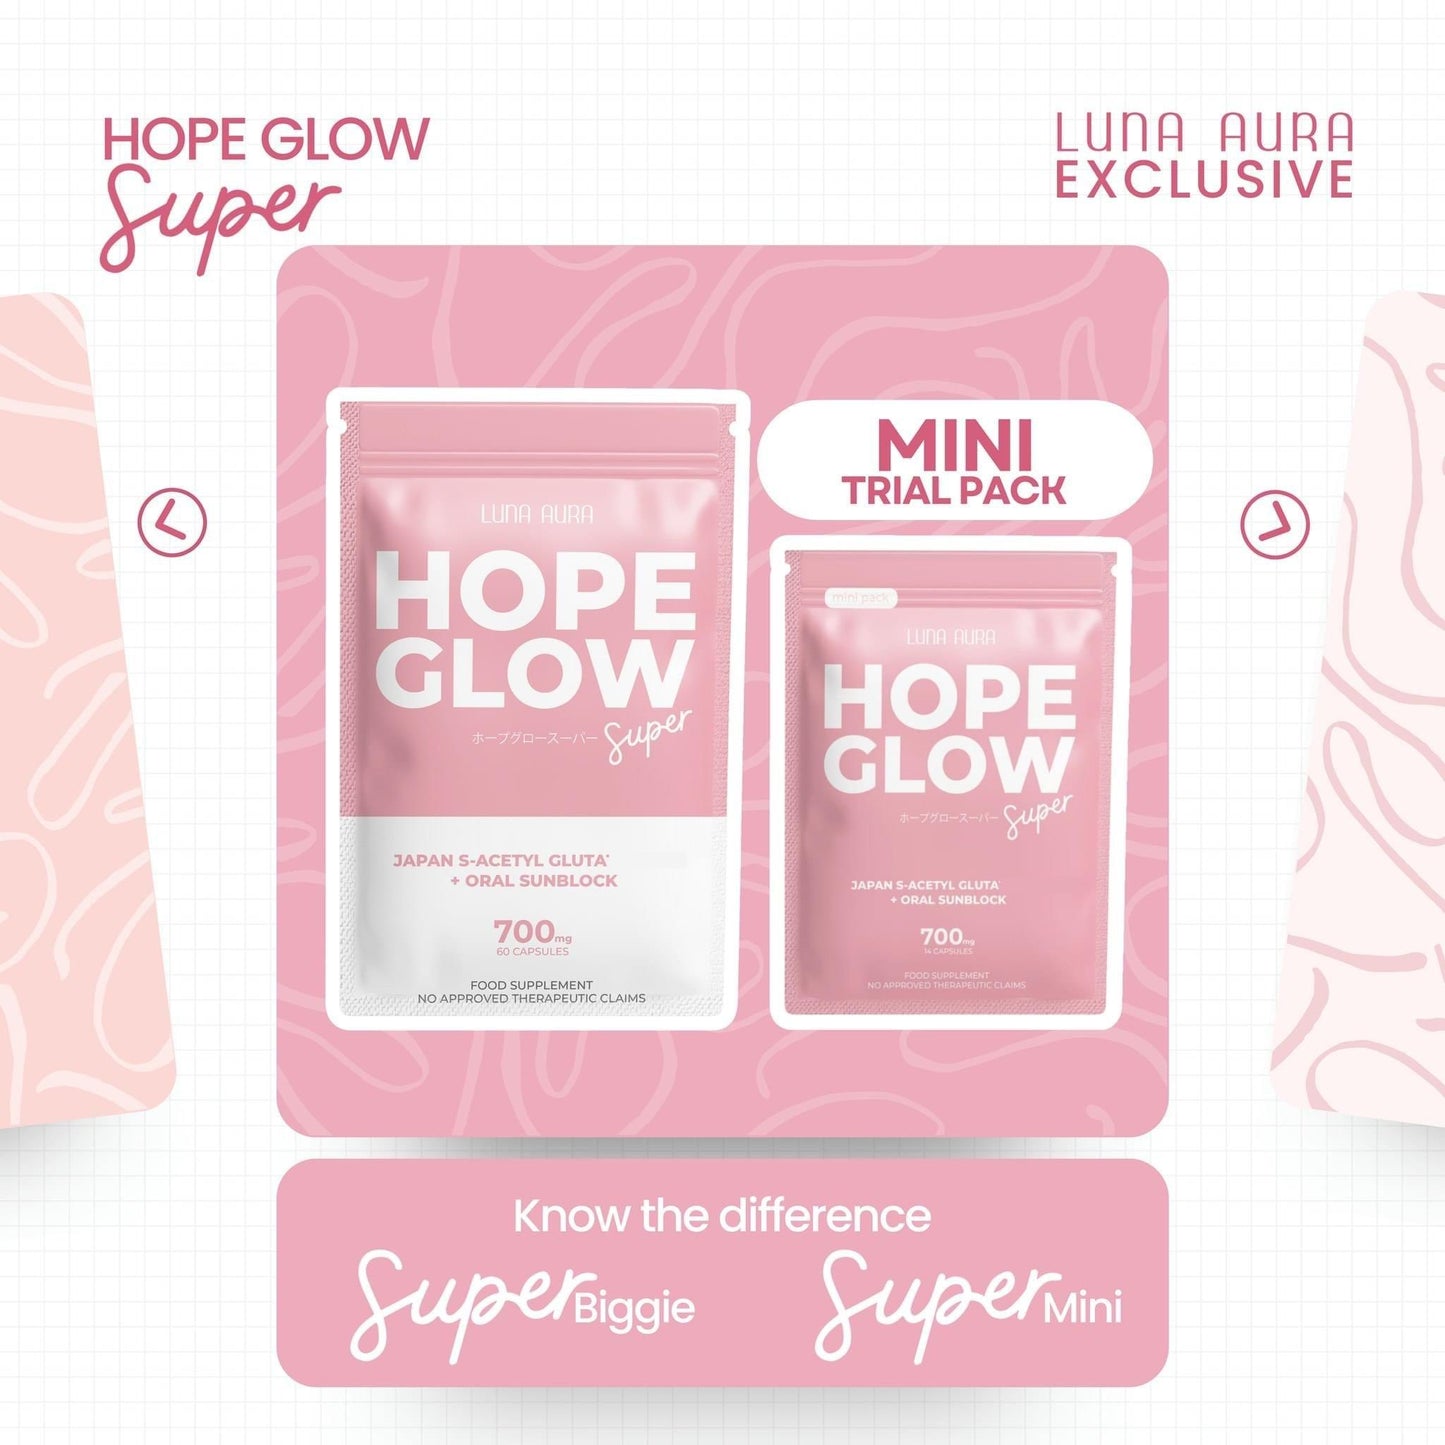 Luna Aura Hope Glow Super Japan S-Acetyl Glutathione + Oral Sunblock 700mg - Astrid & Rose